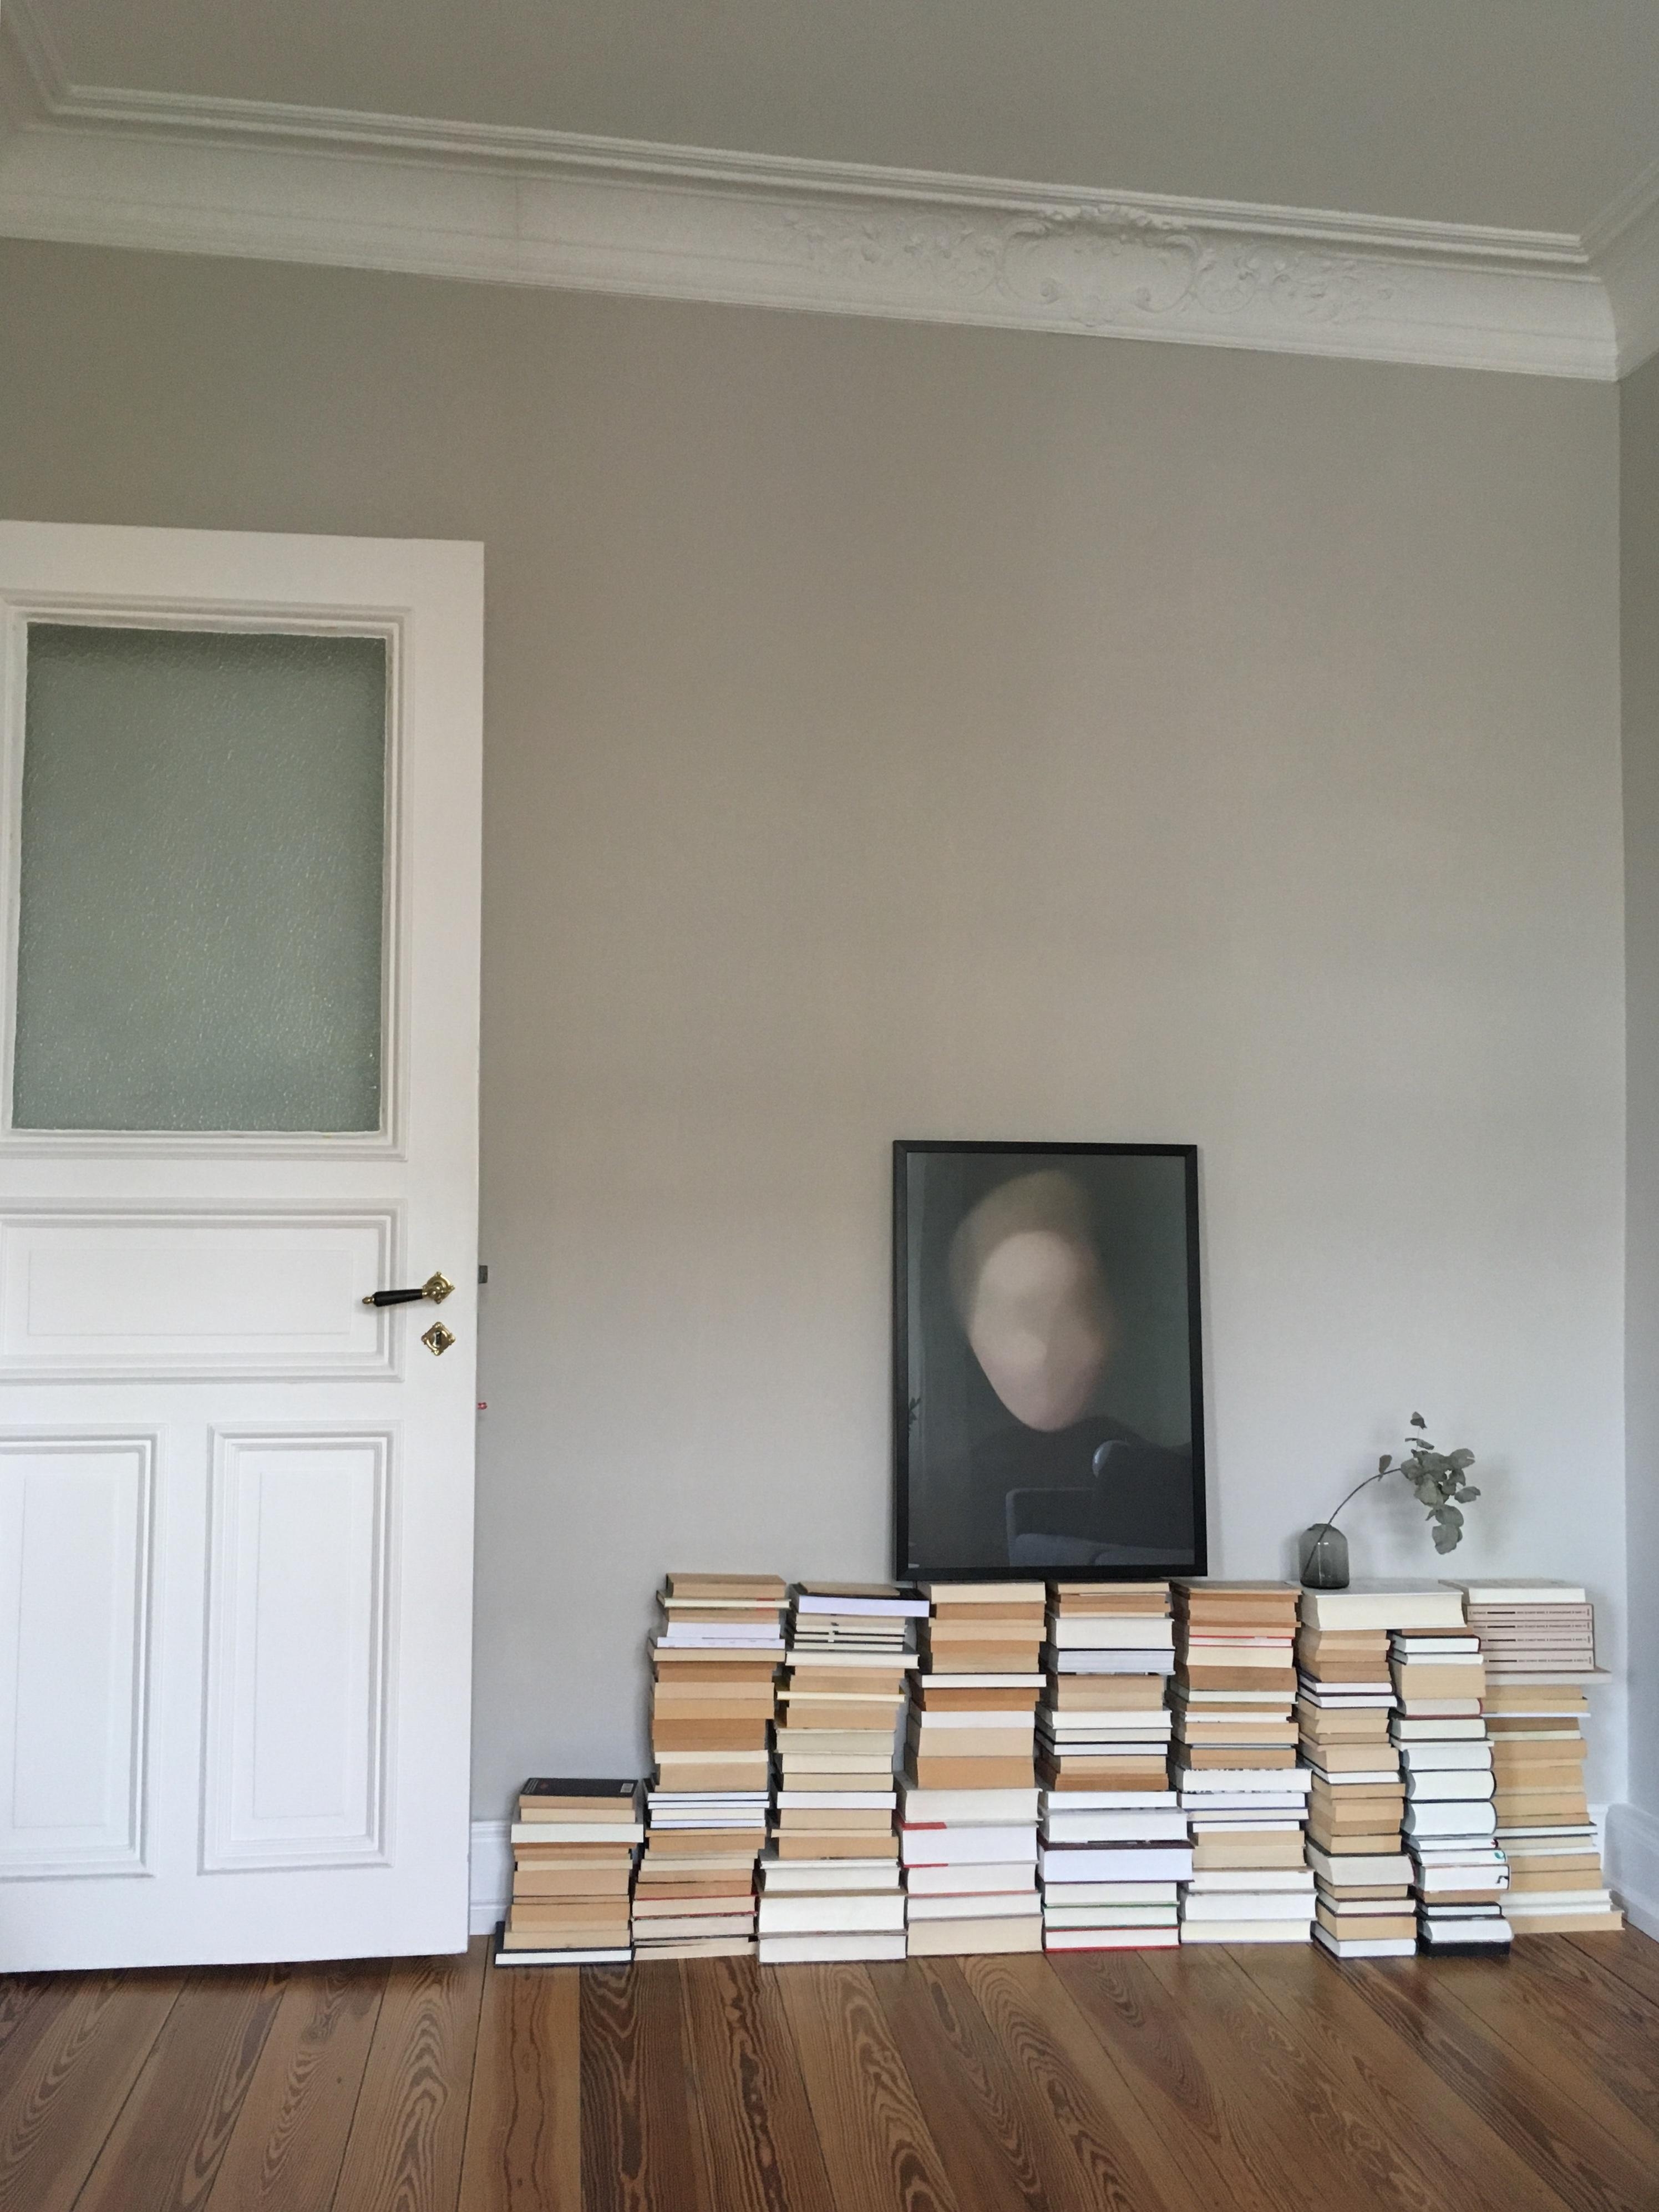 #shelfie #books #bücherstapel #bücherregal #living #altbau #altbauwohnung #interior #stuck #dielenboden